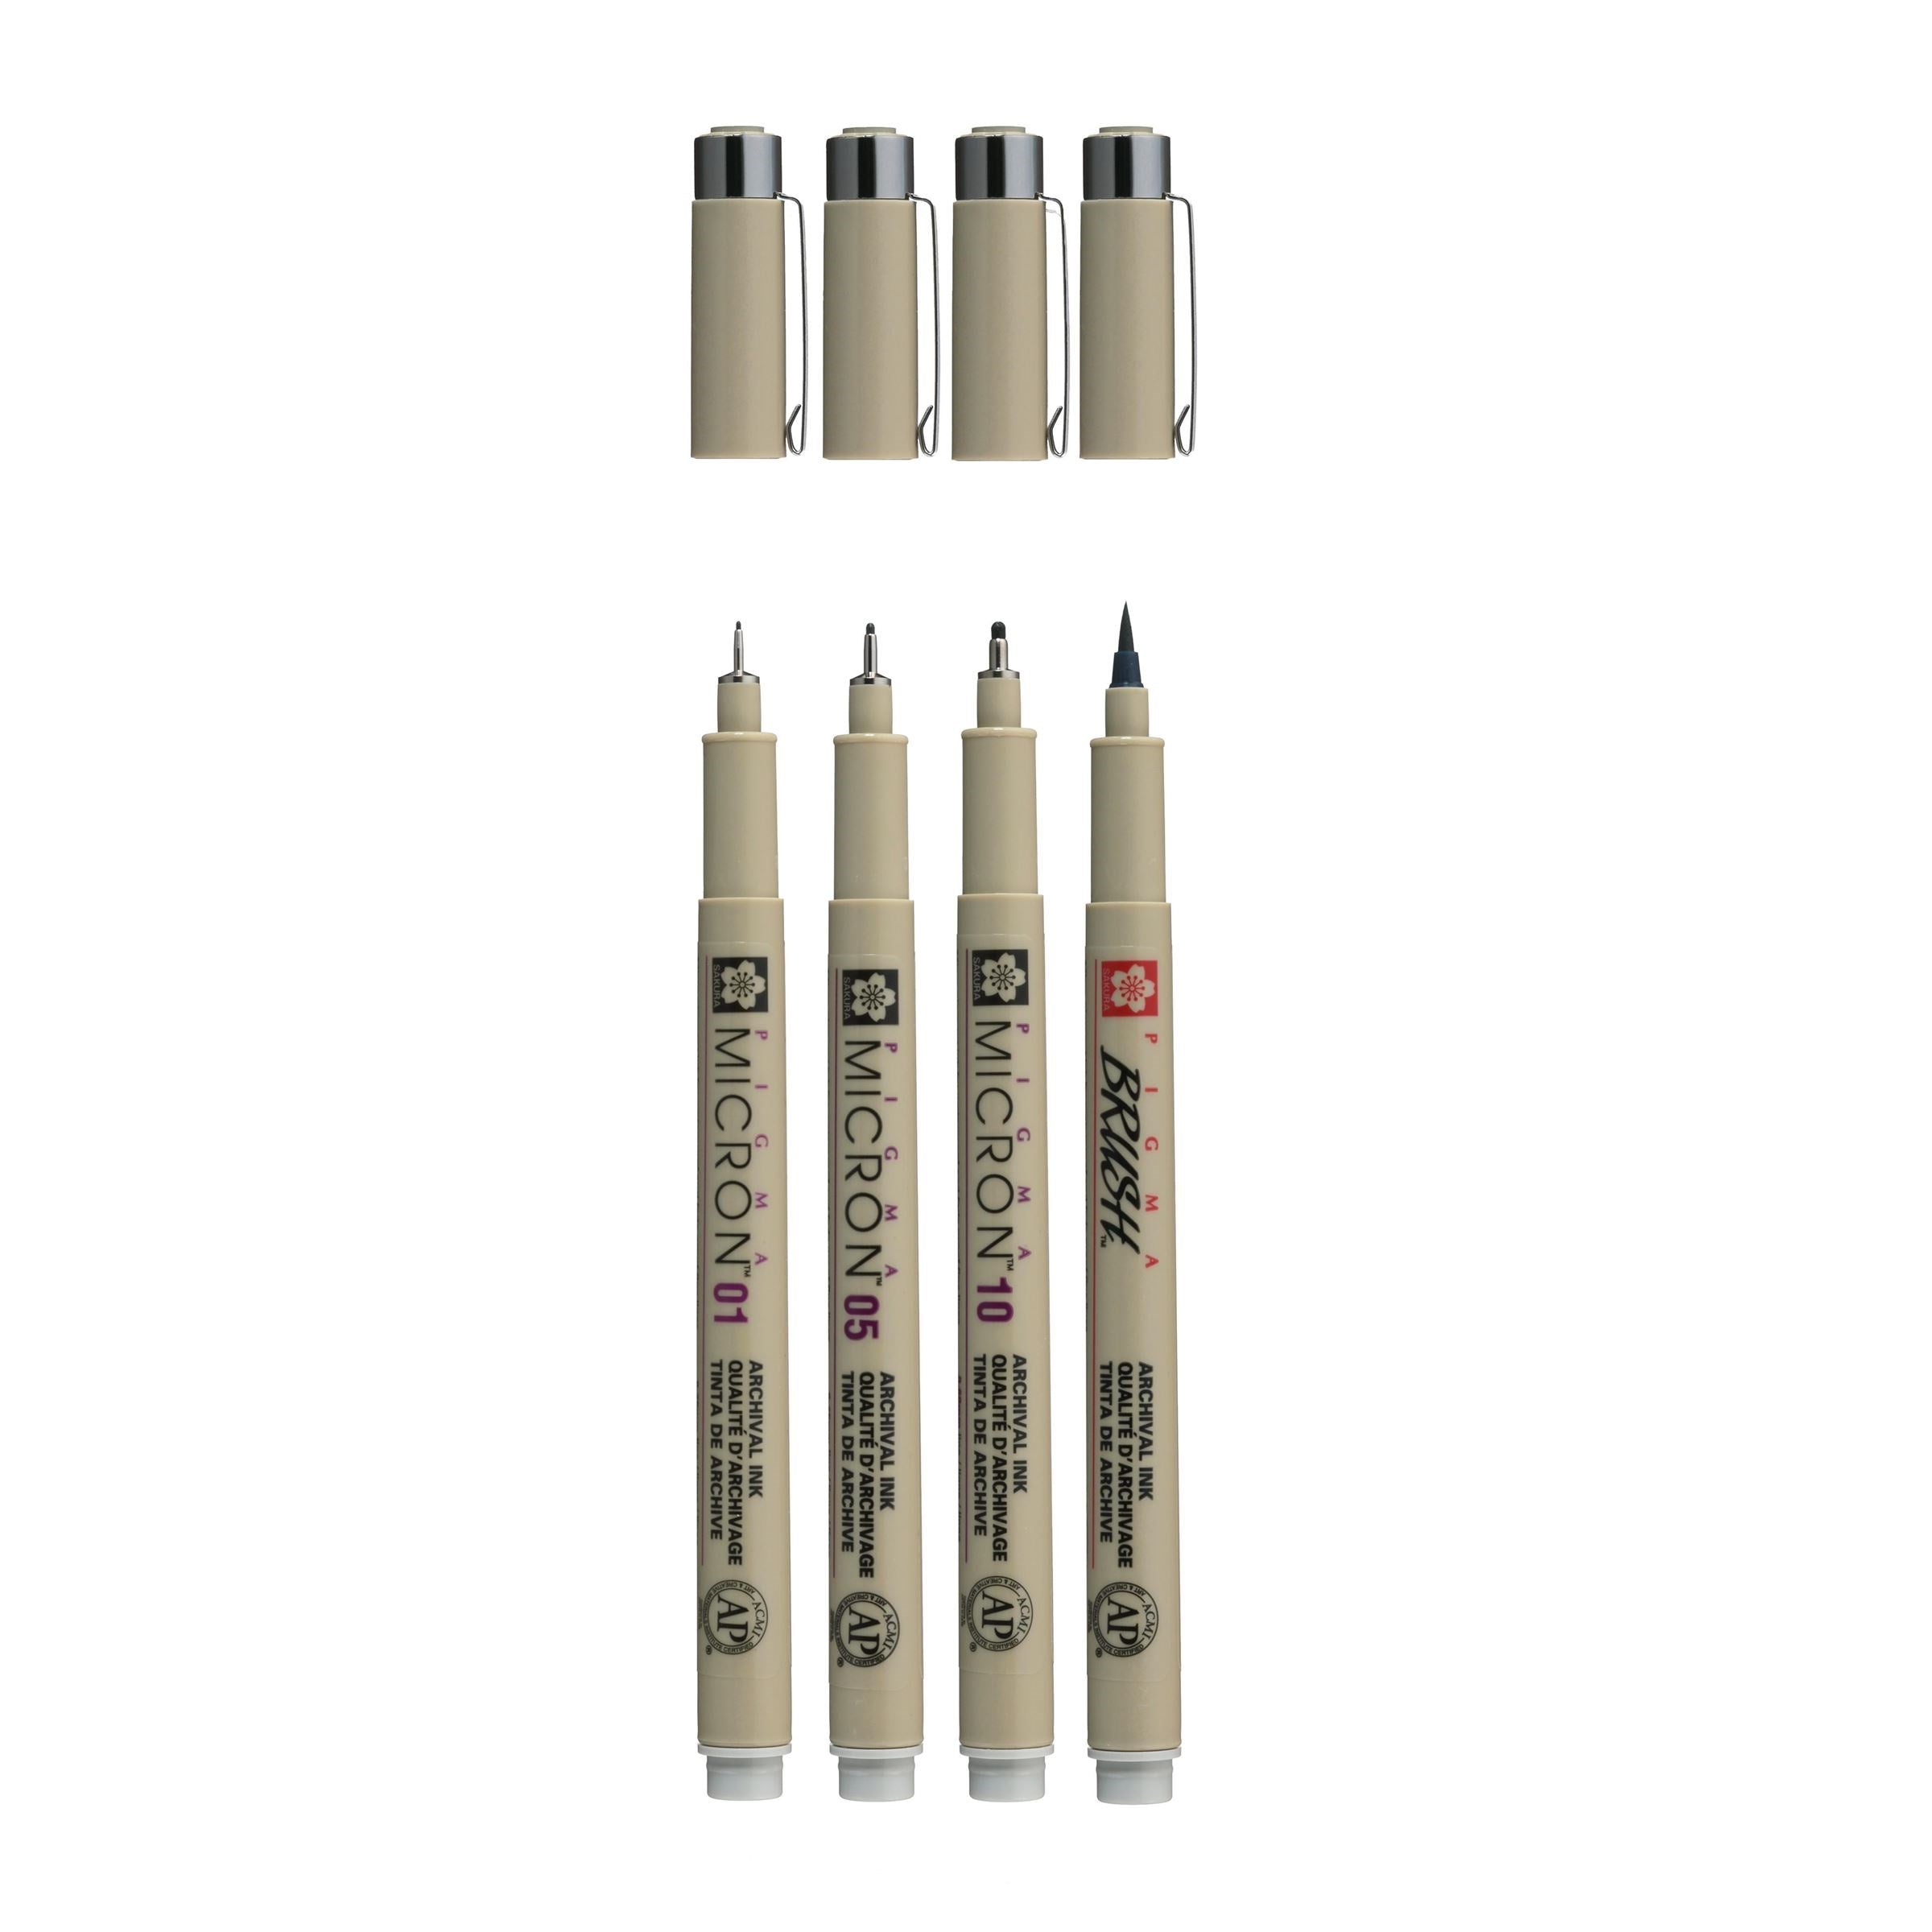 Pigma Micron fineliner set | 4 sizes, Light Cool Gray